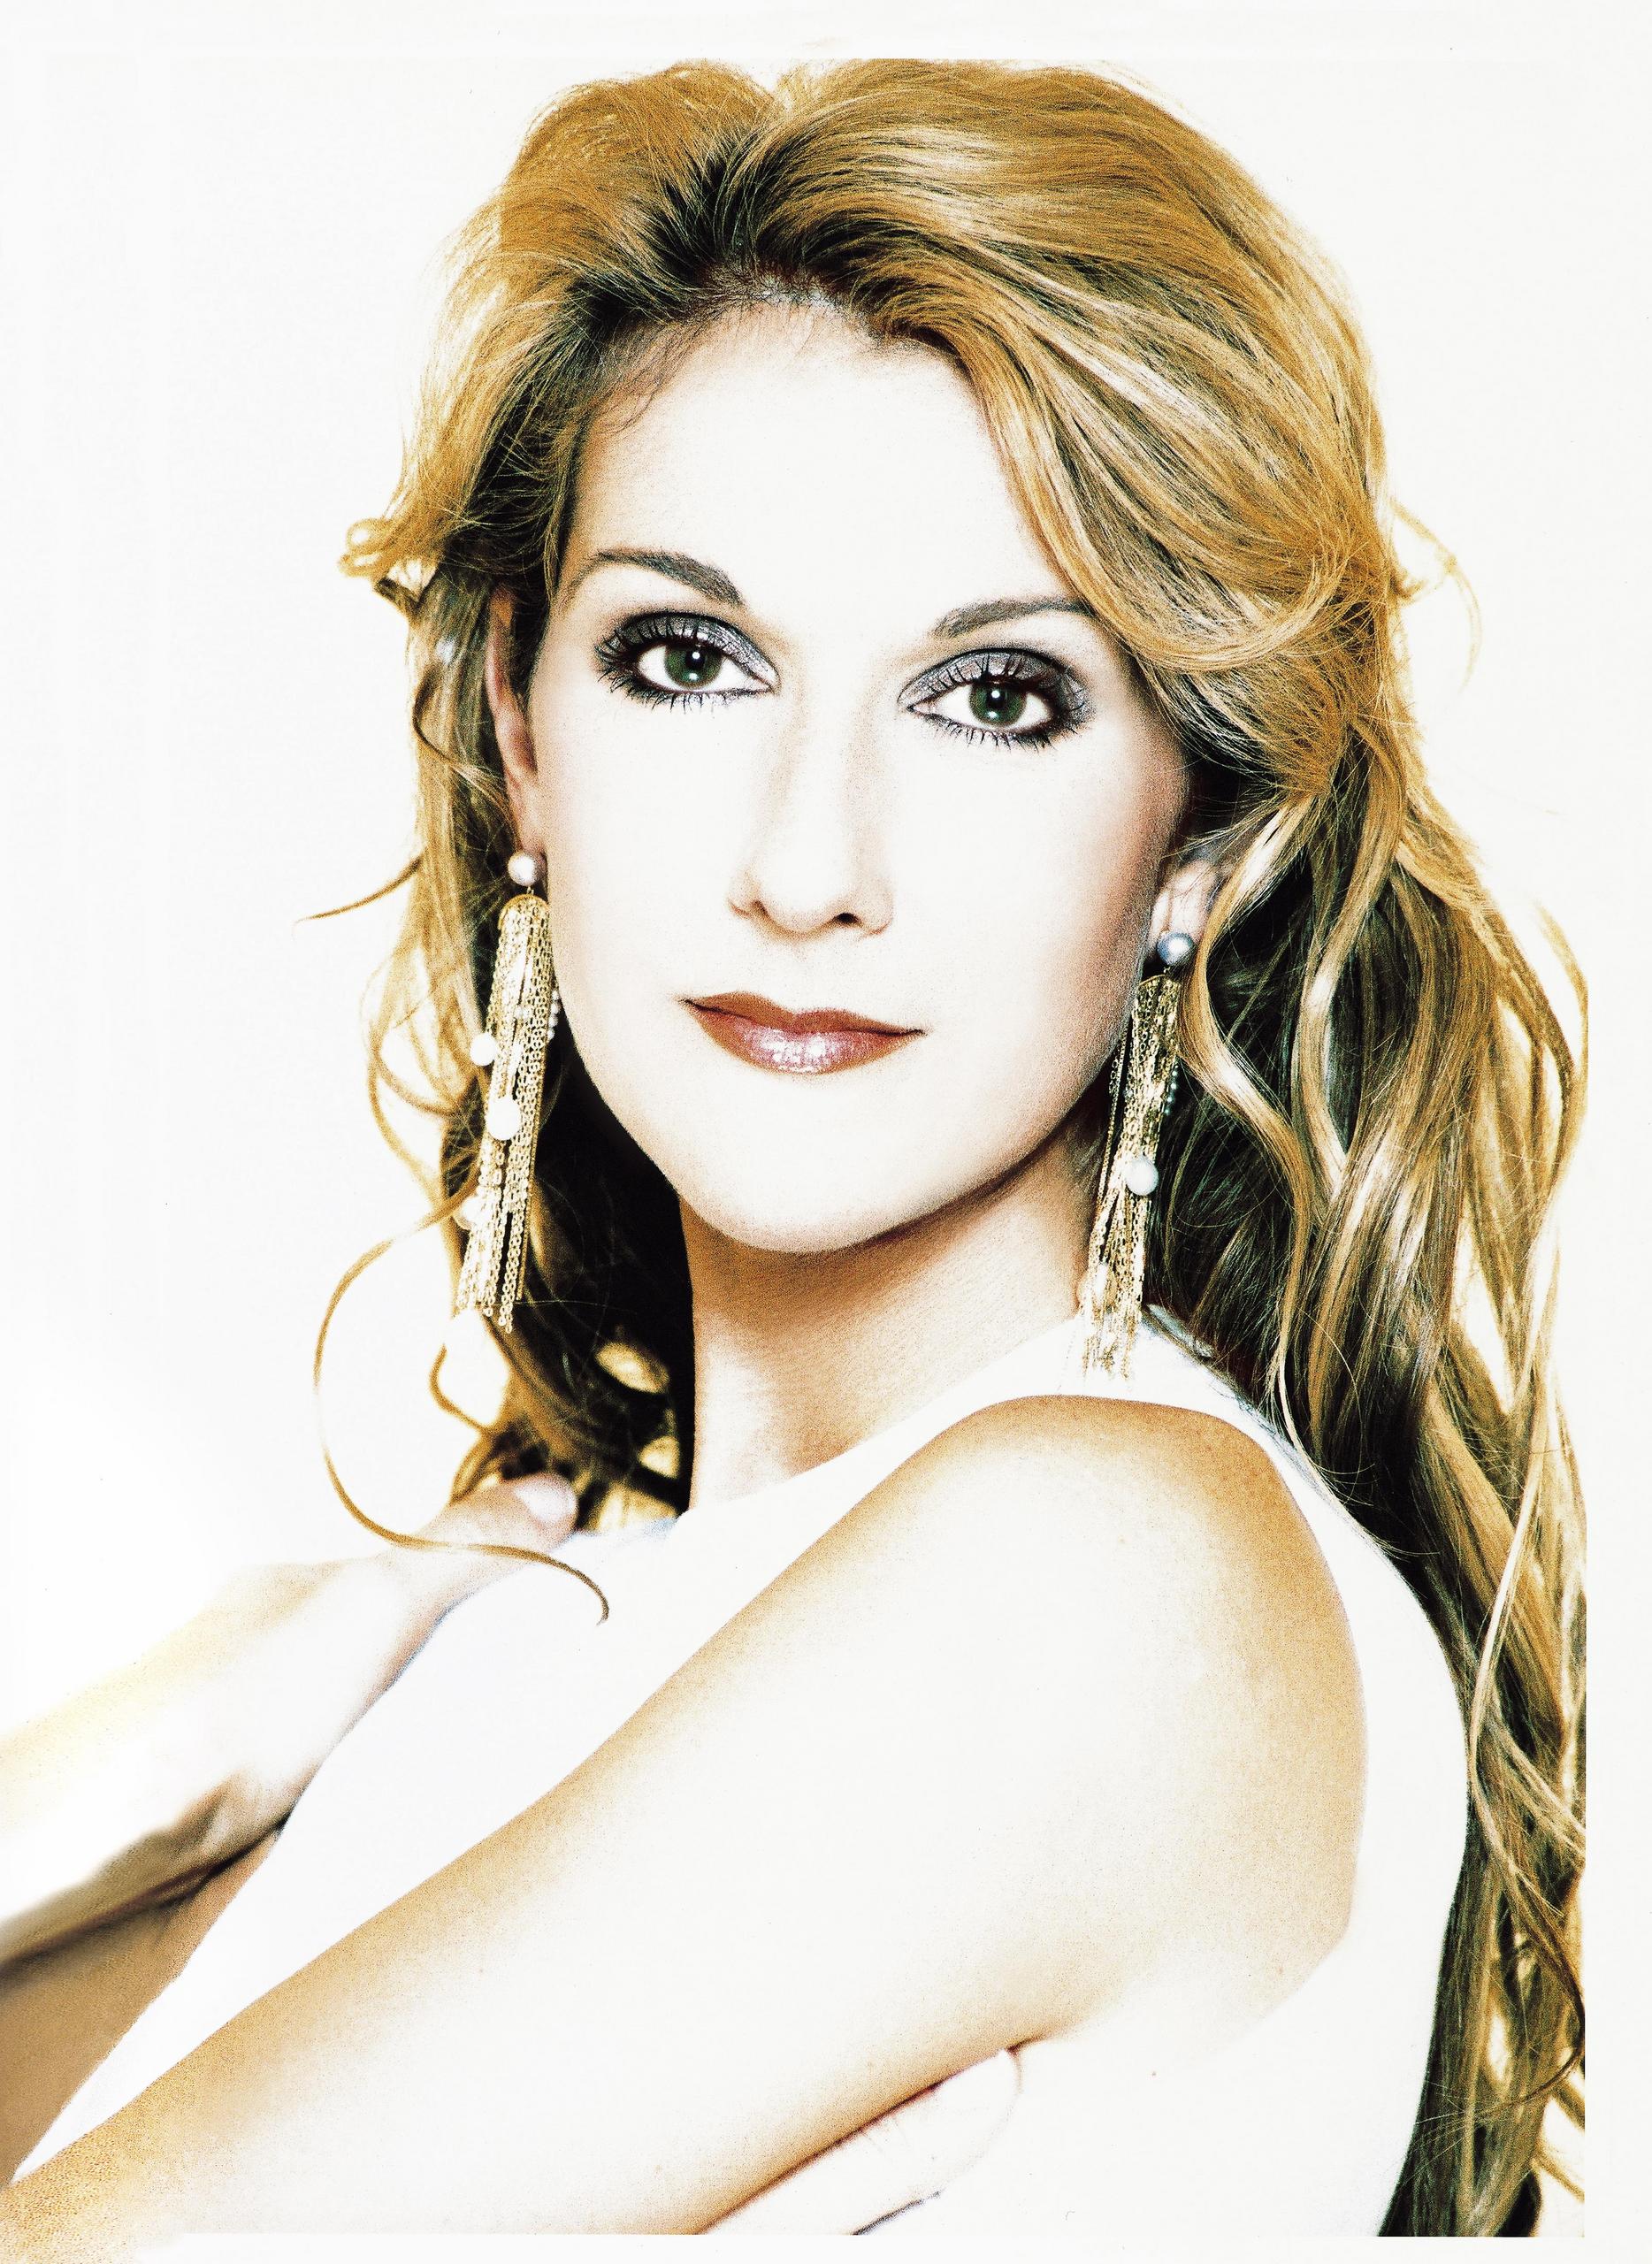 Celine Dion - Michel Marizy Photoshoot 2002 - Celine Dion Photo (23532138) - Fanpop